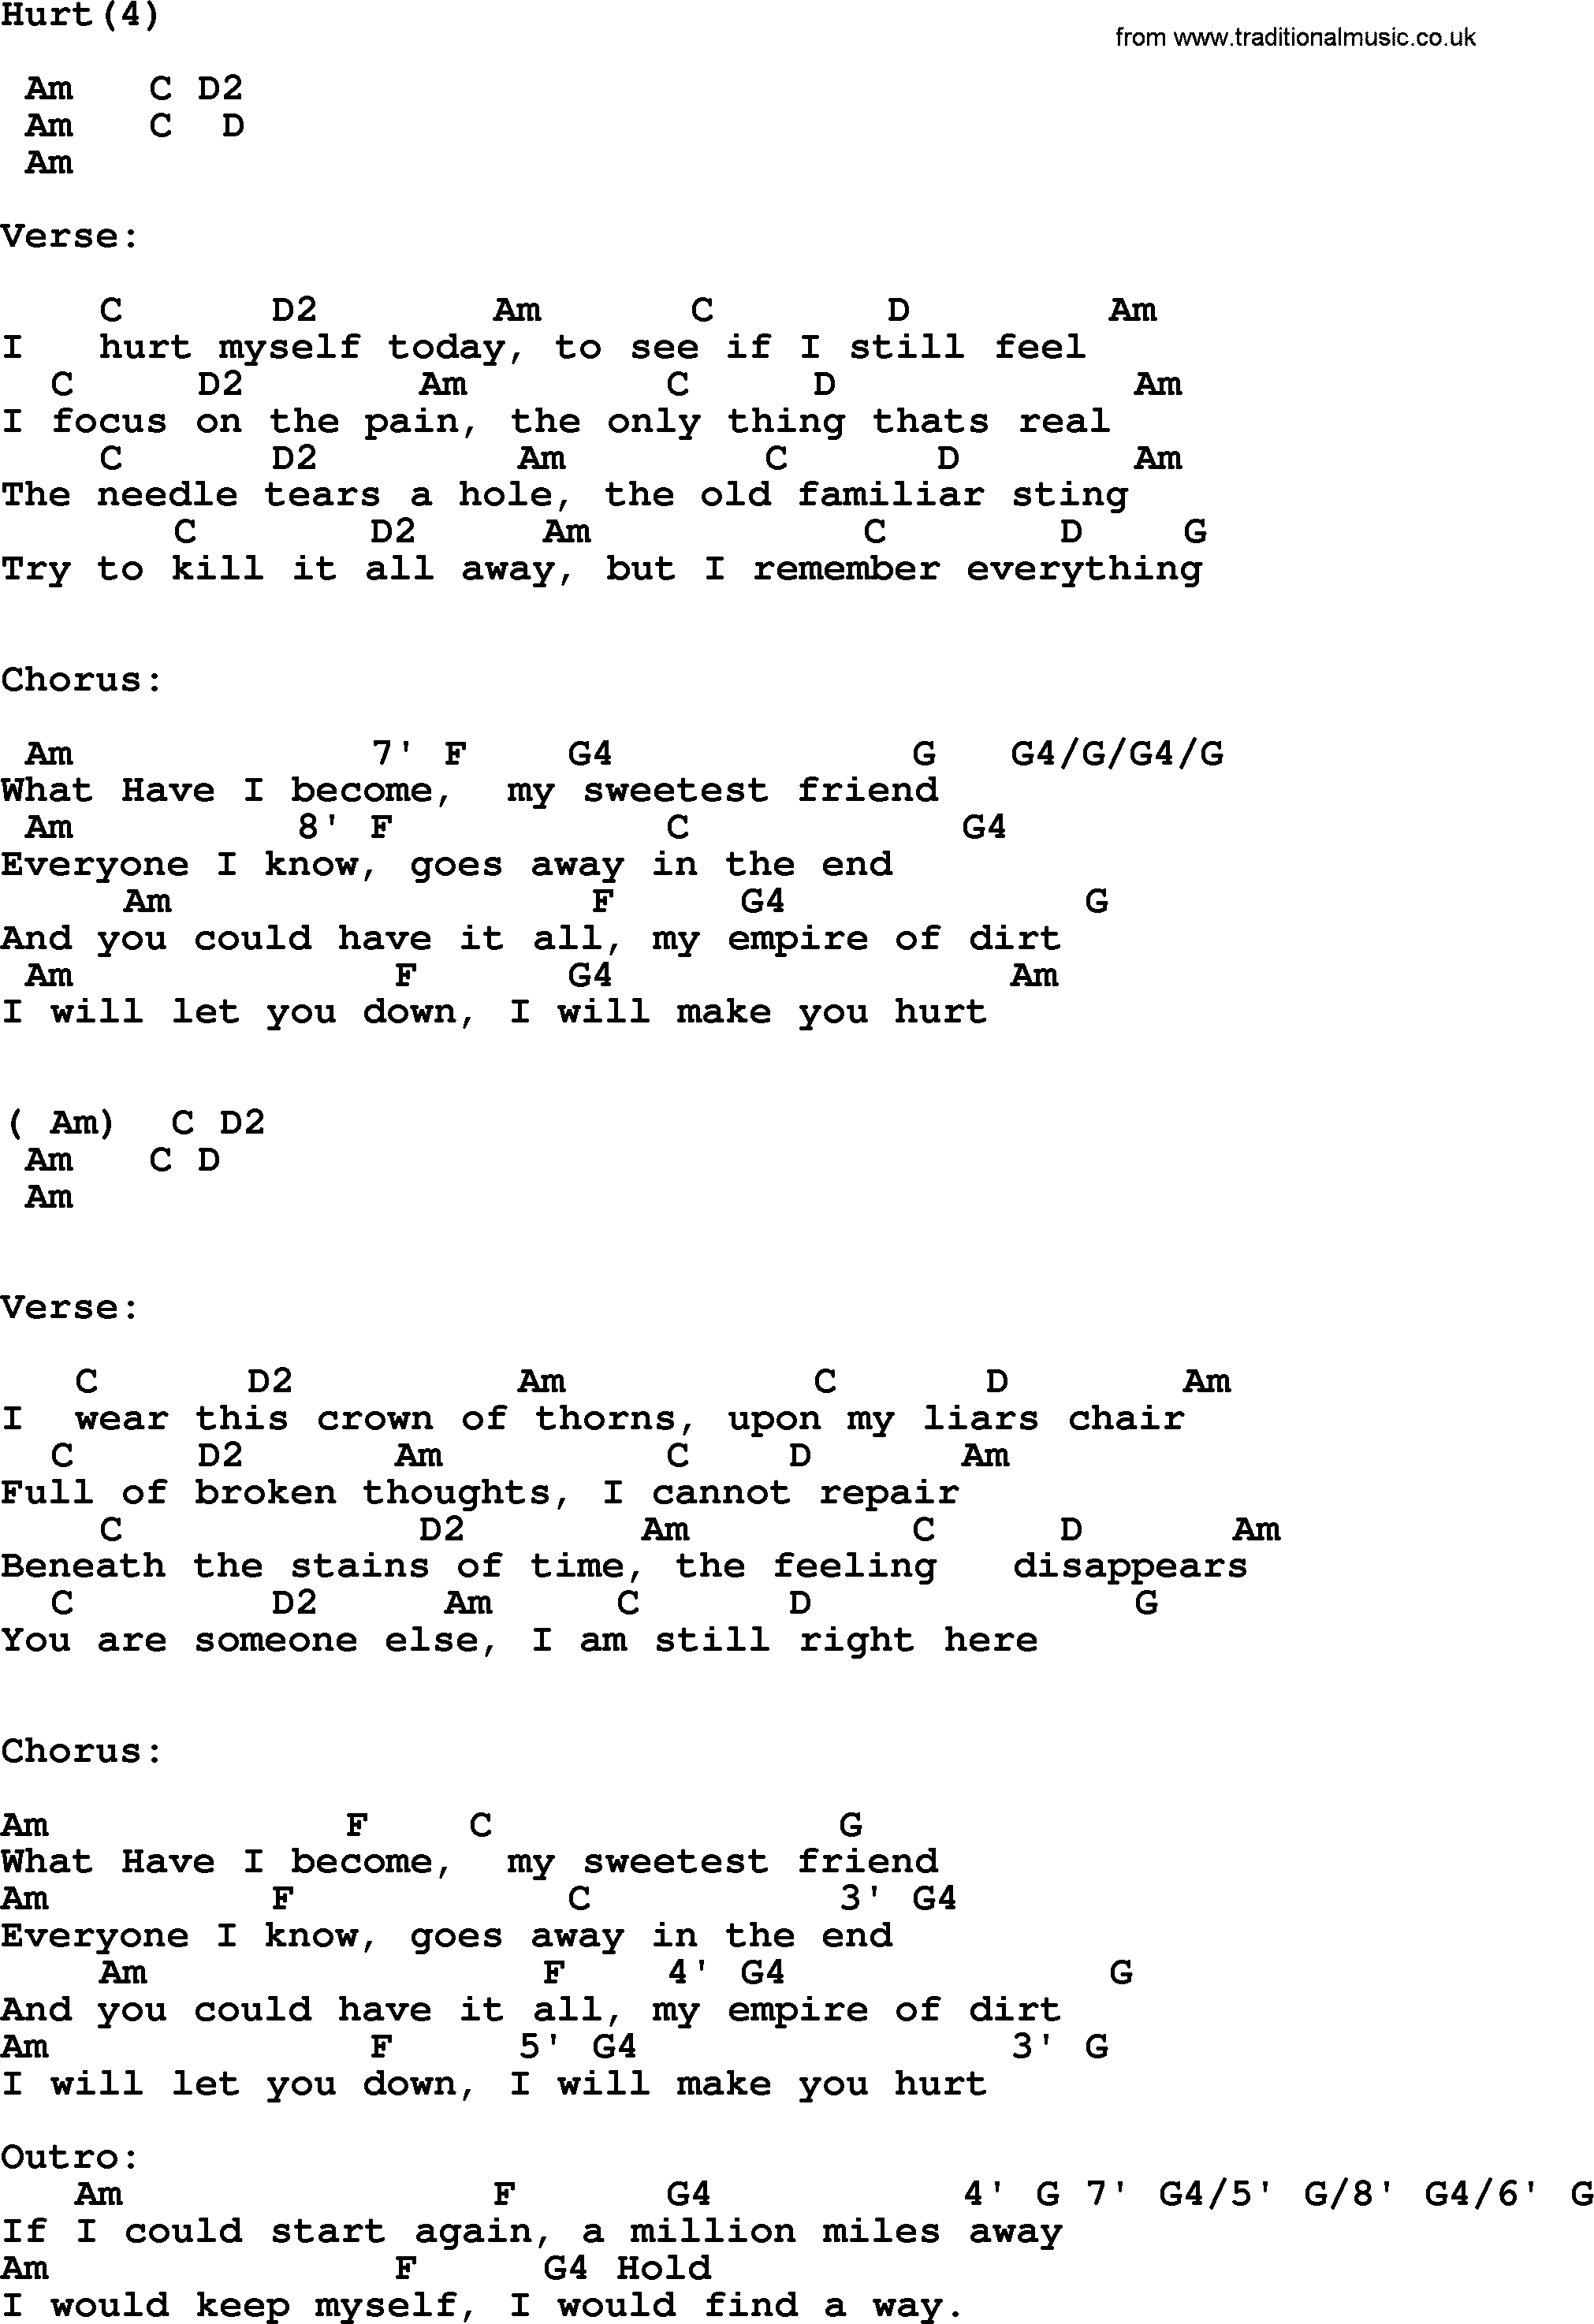 Johnny Cash song Hurt(4), lyrics and chords